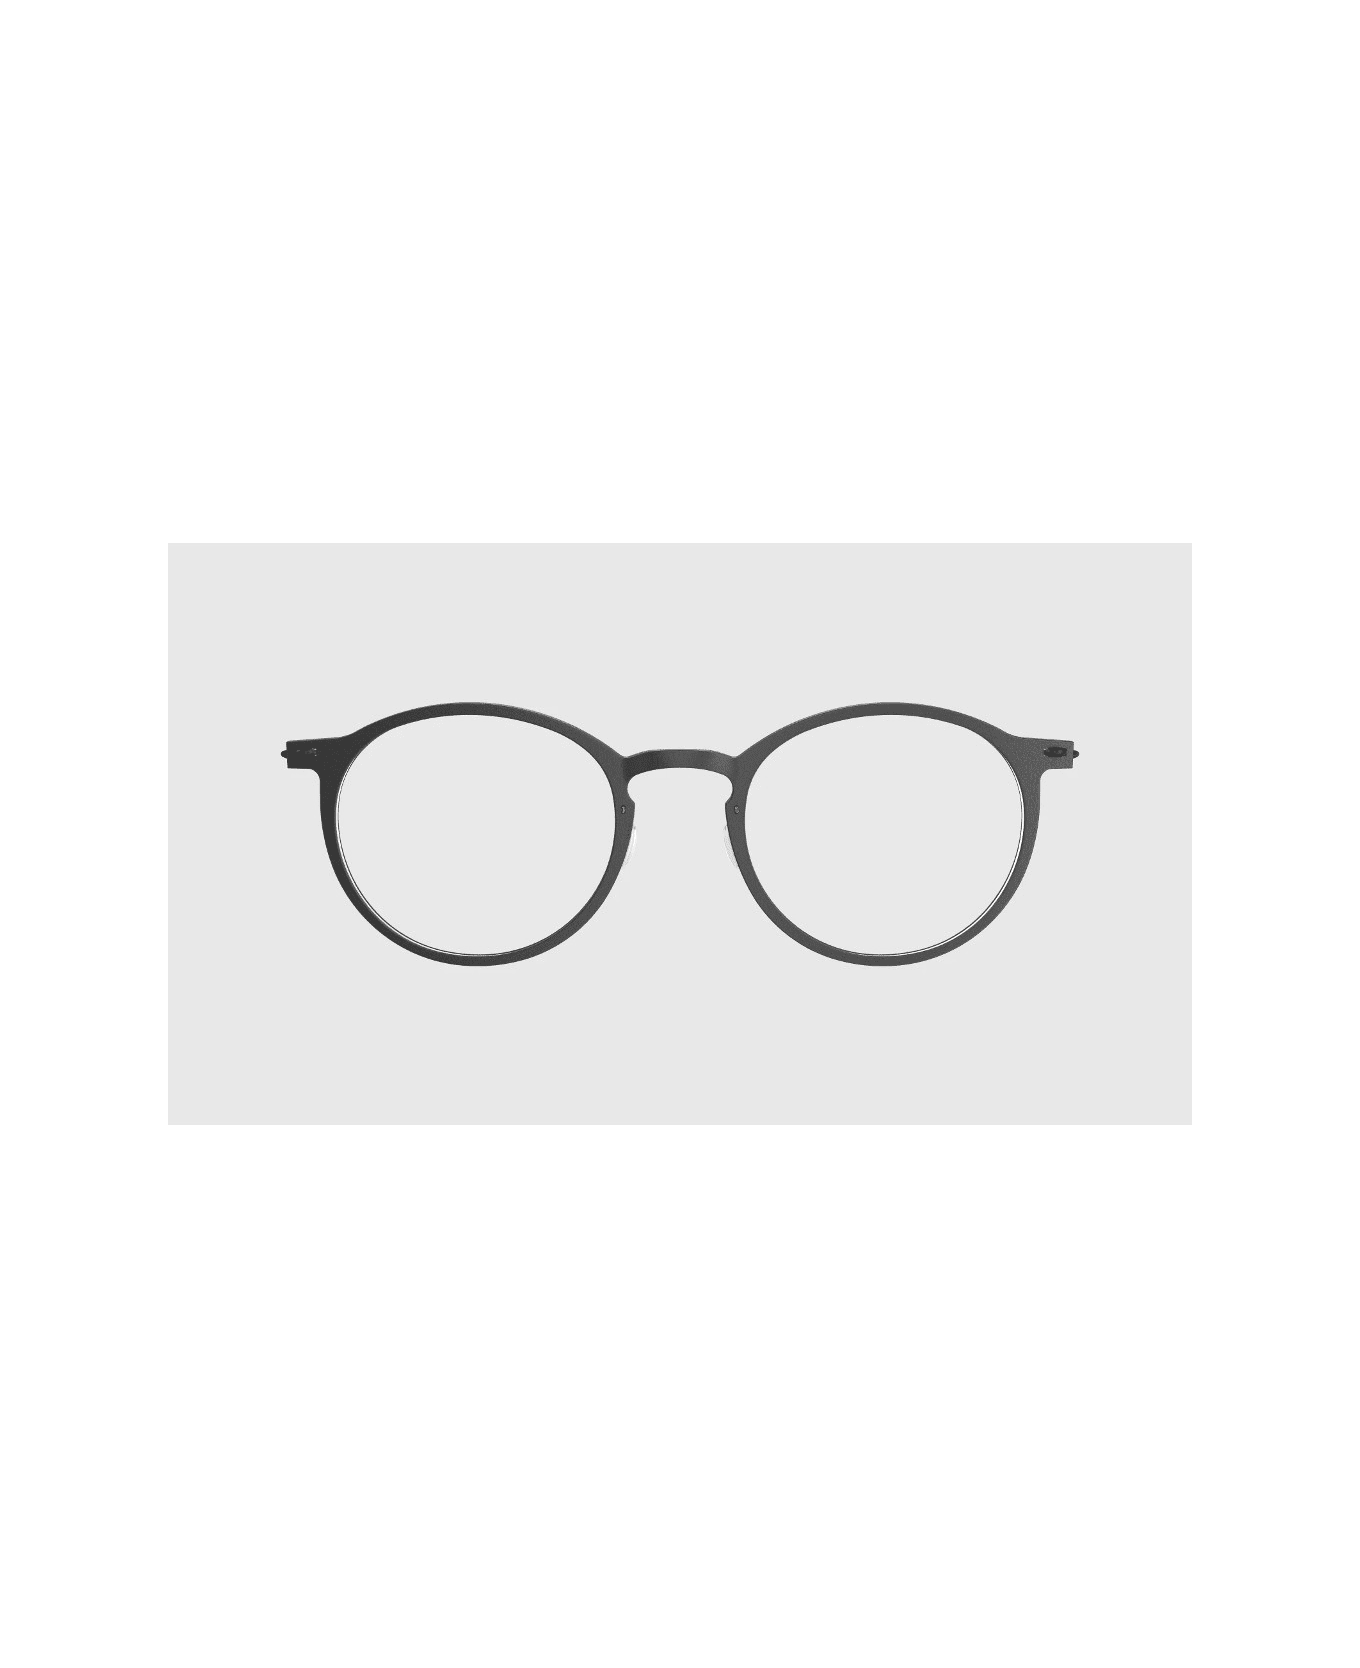 LINDBERG Now 6541 - D16 Glasses - Nero